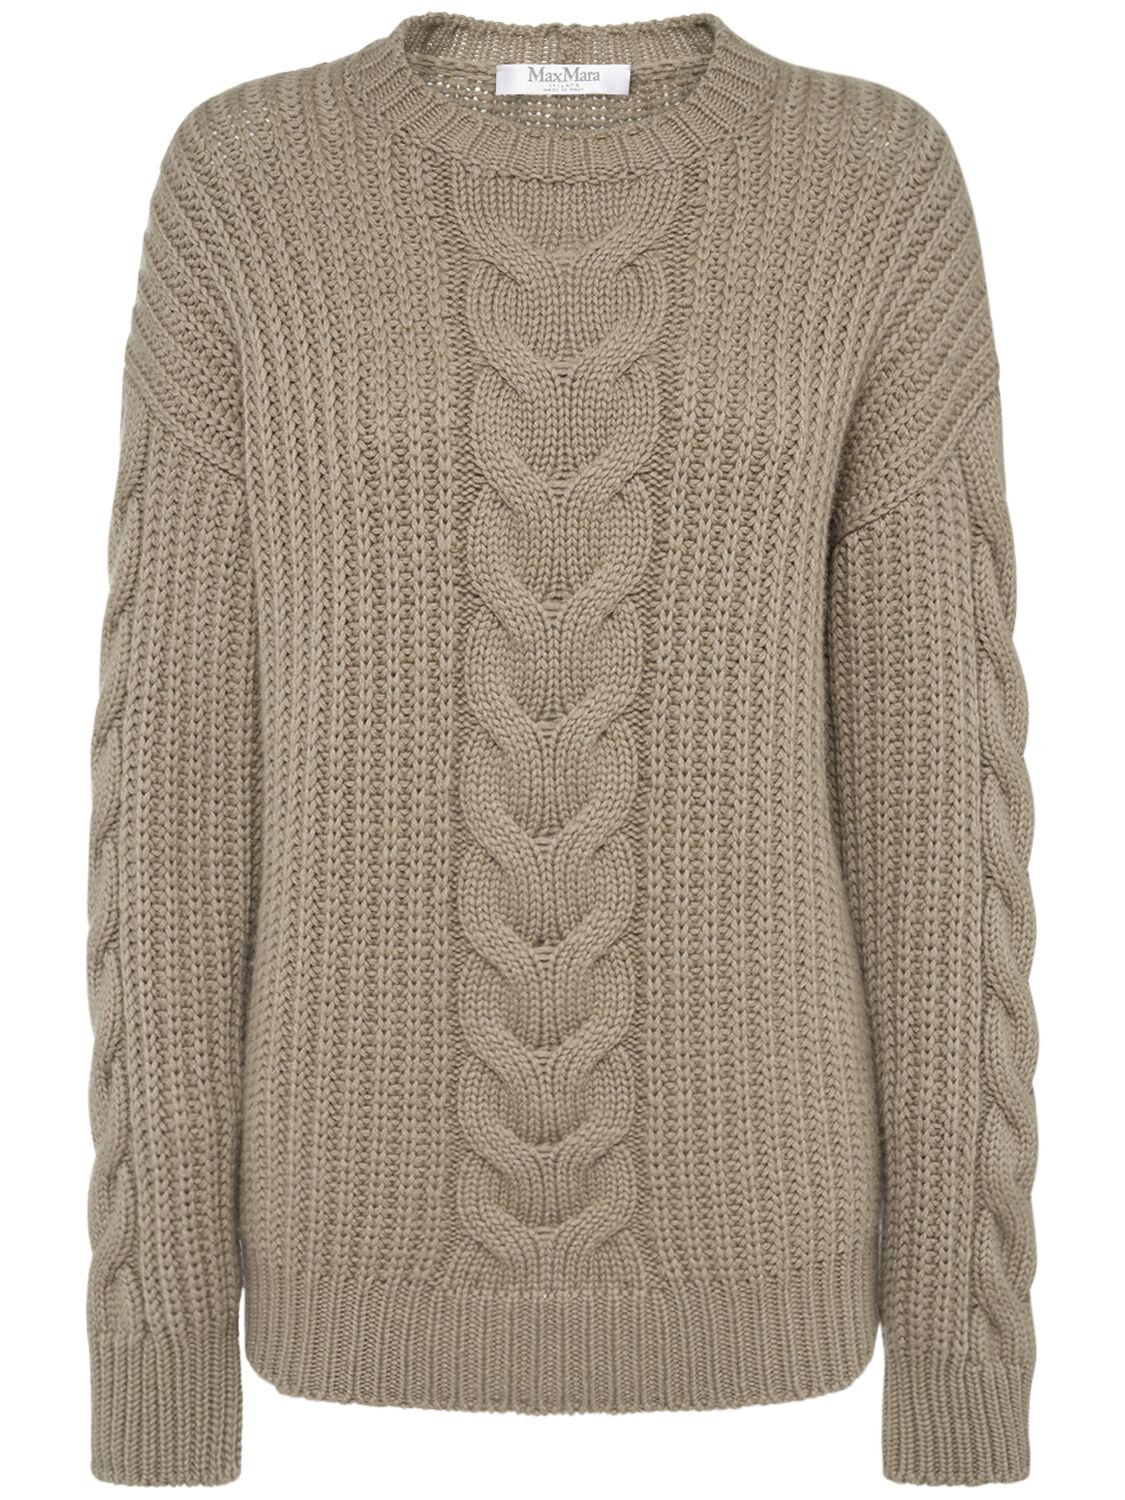 Max Mara Acciaio1234 Cotton Rib Knit Sweater In Khaki